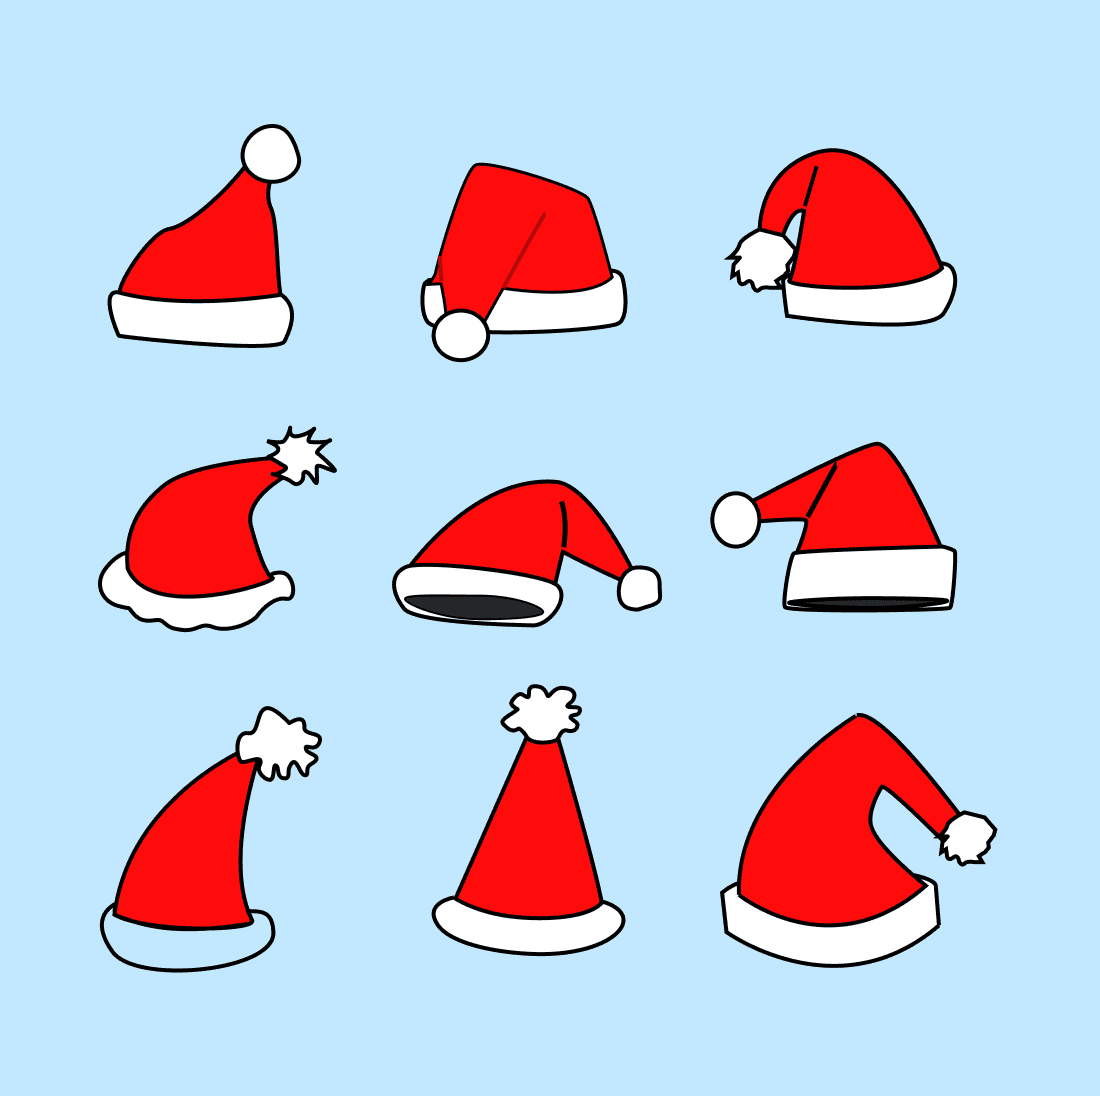 Red Santa hats with a white balambon.